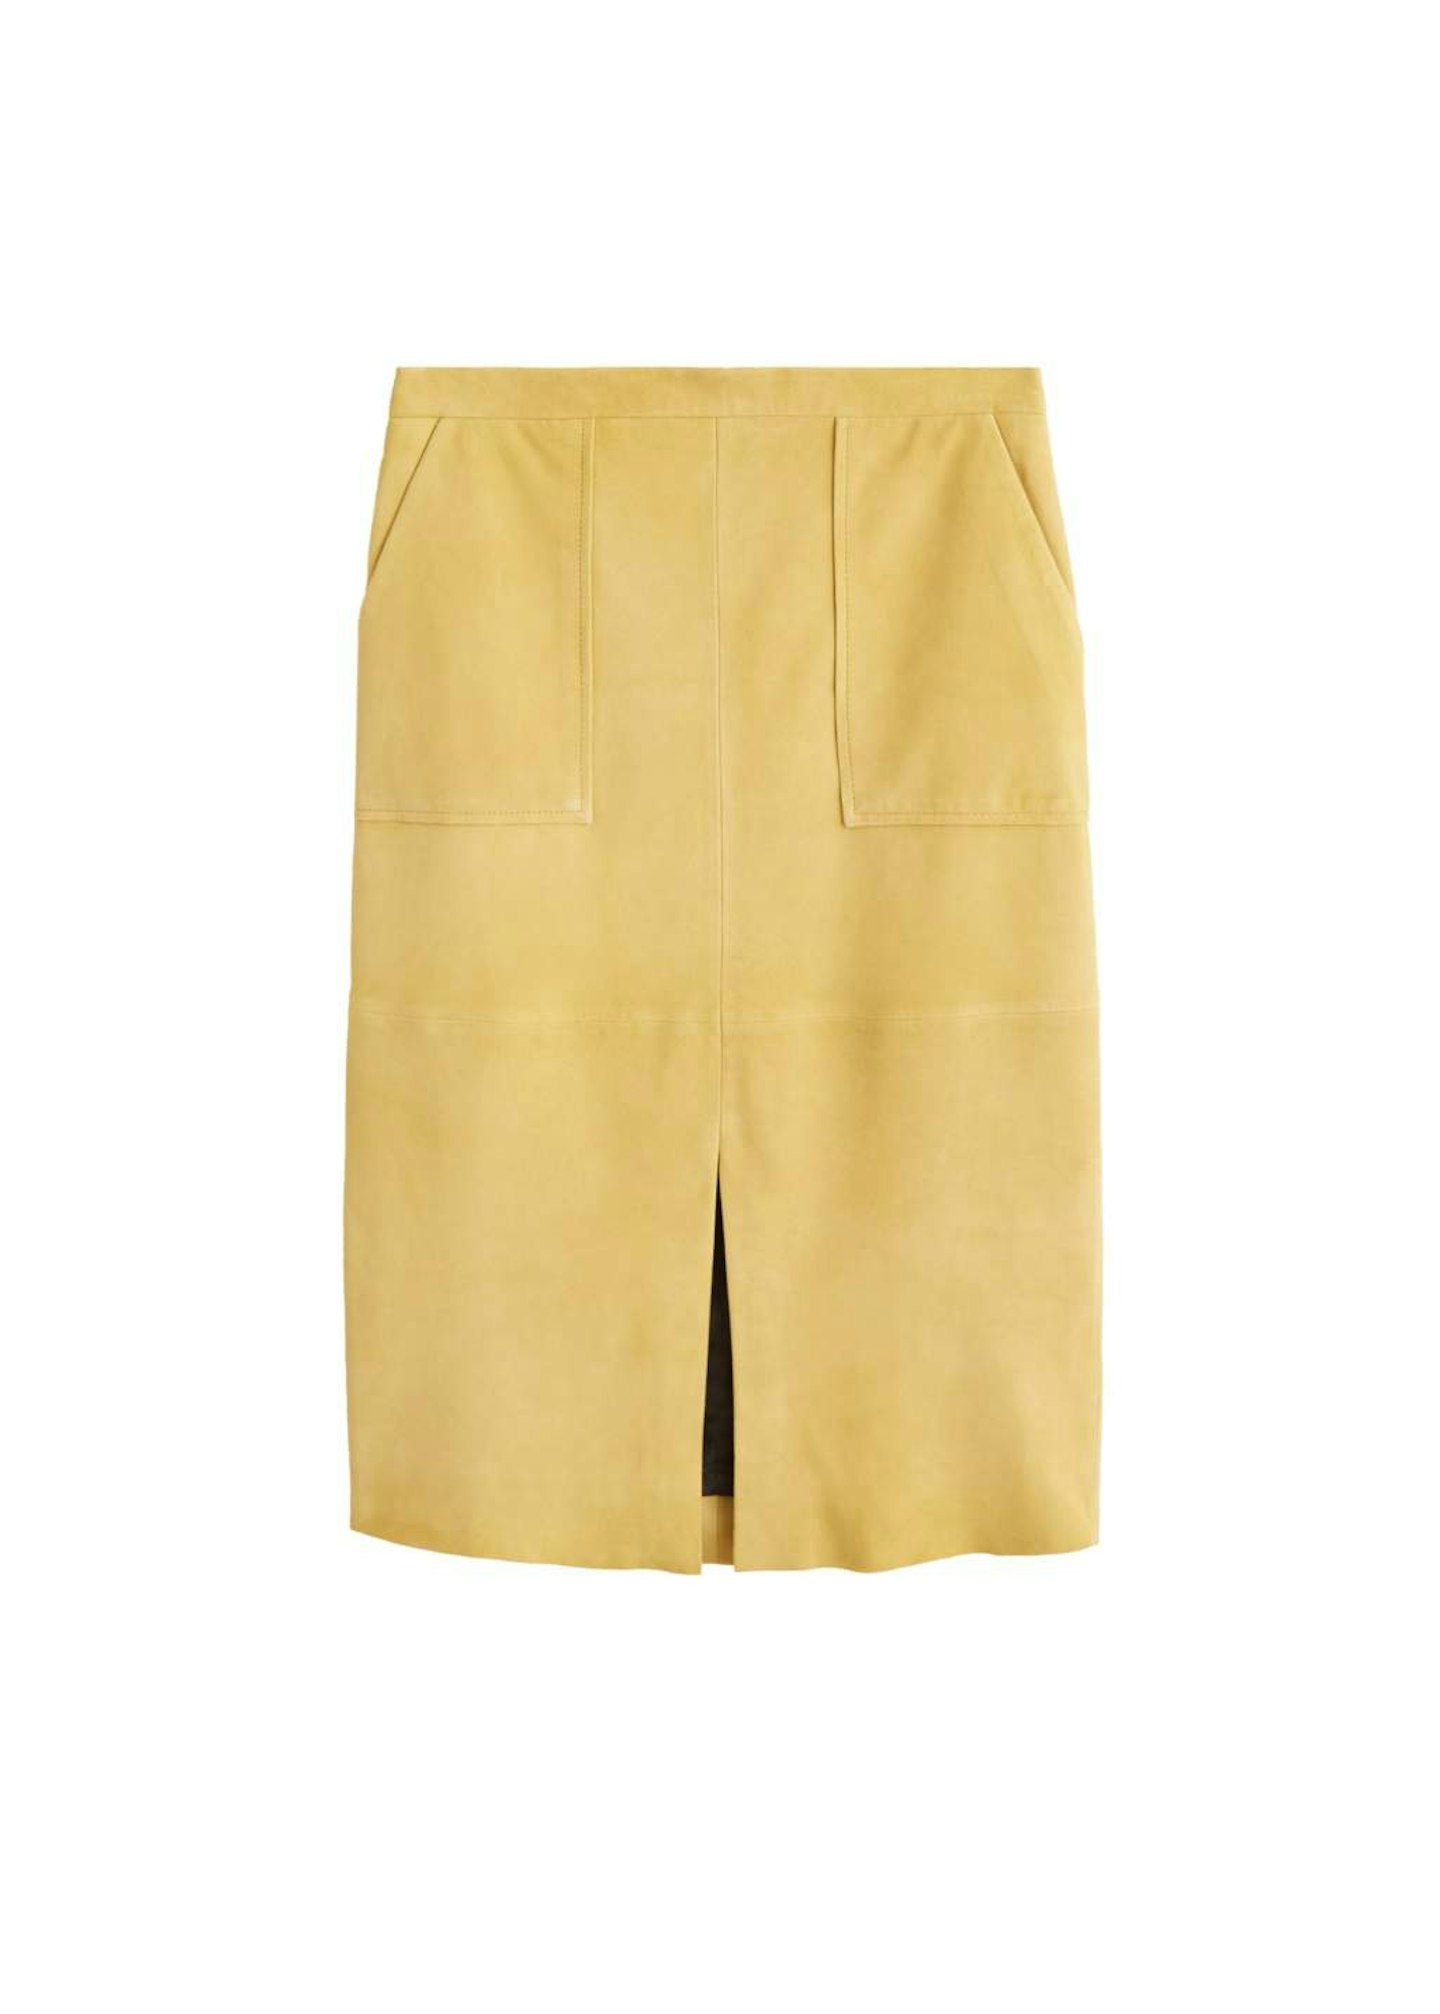 Mango, Leather Pencil Skirt, £119.99